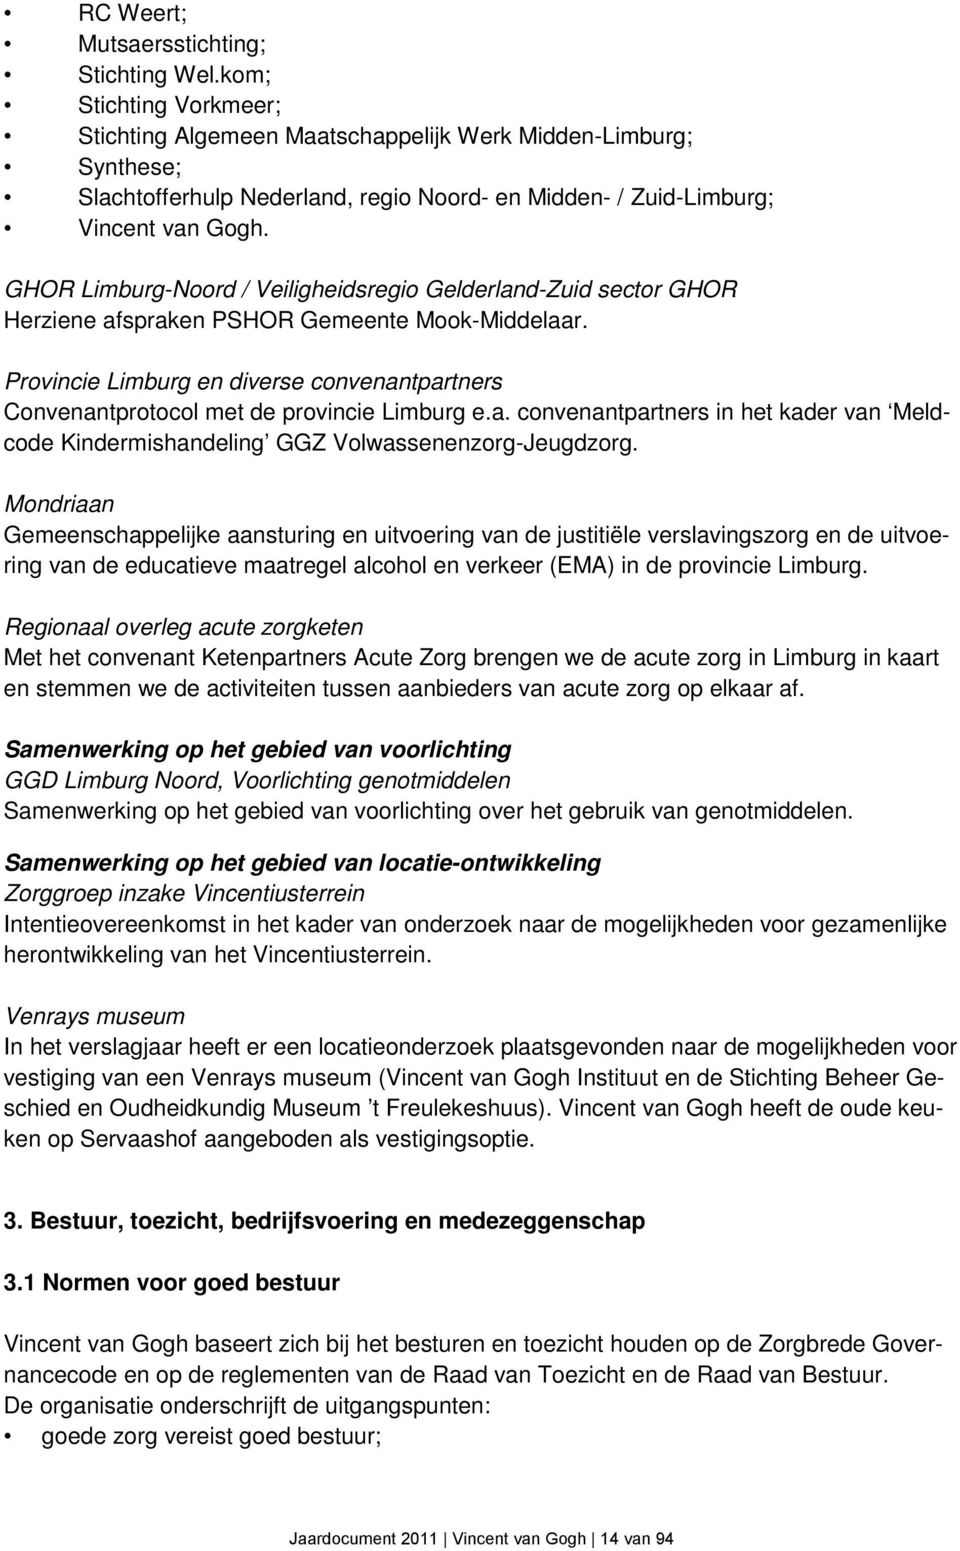 GHOR Limburg-Noord / Veiligheidsregio Gelderland-Zuid sector GHOR Herziene afspraken PSHOR Gemeente Mook-Middelaar.